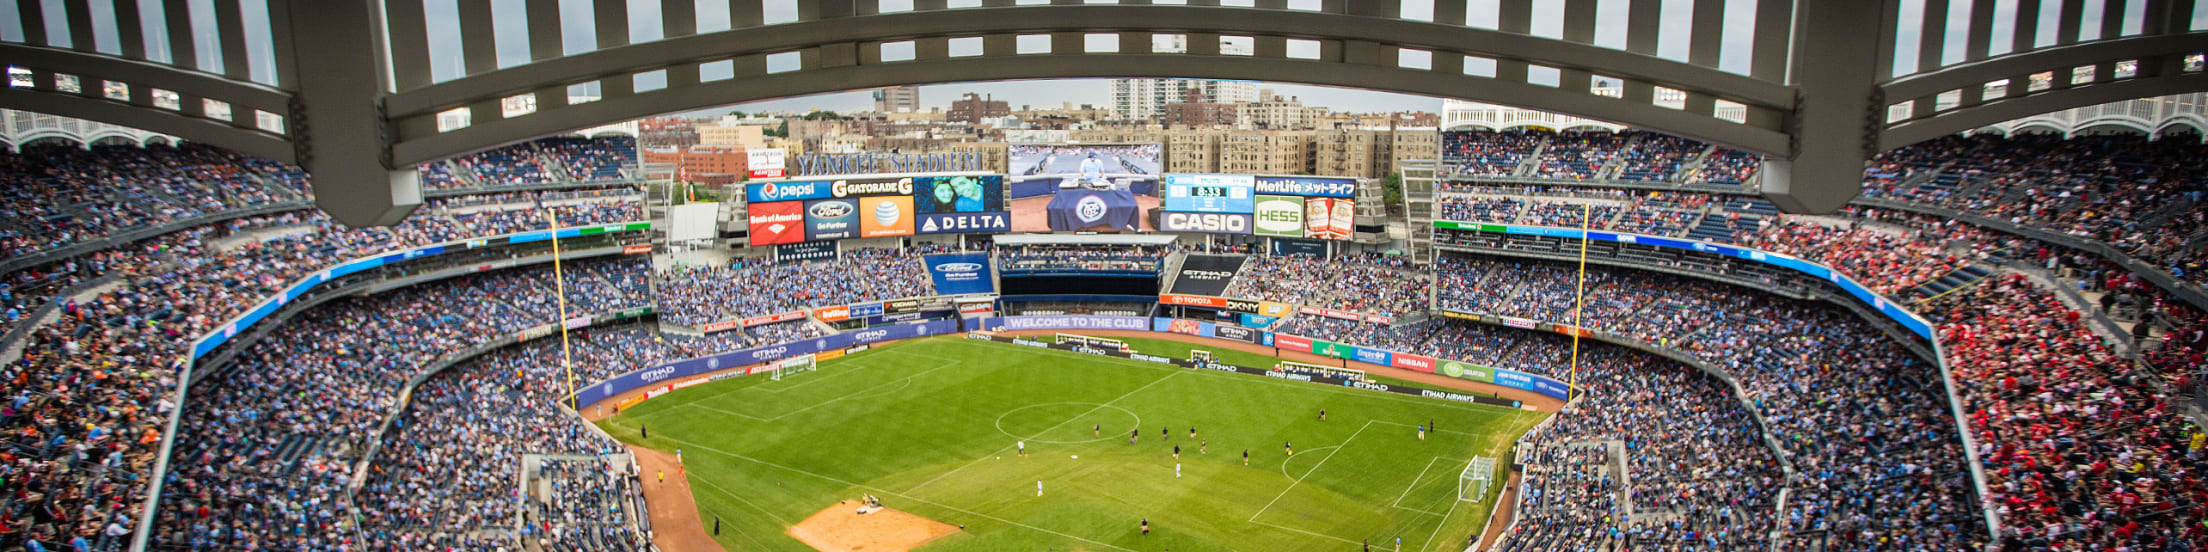 Soccer at Yankee Stadium